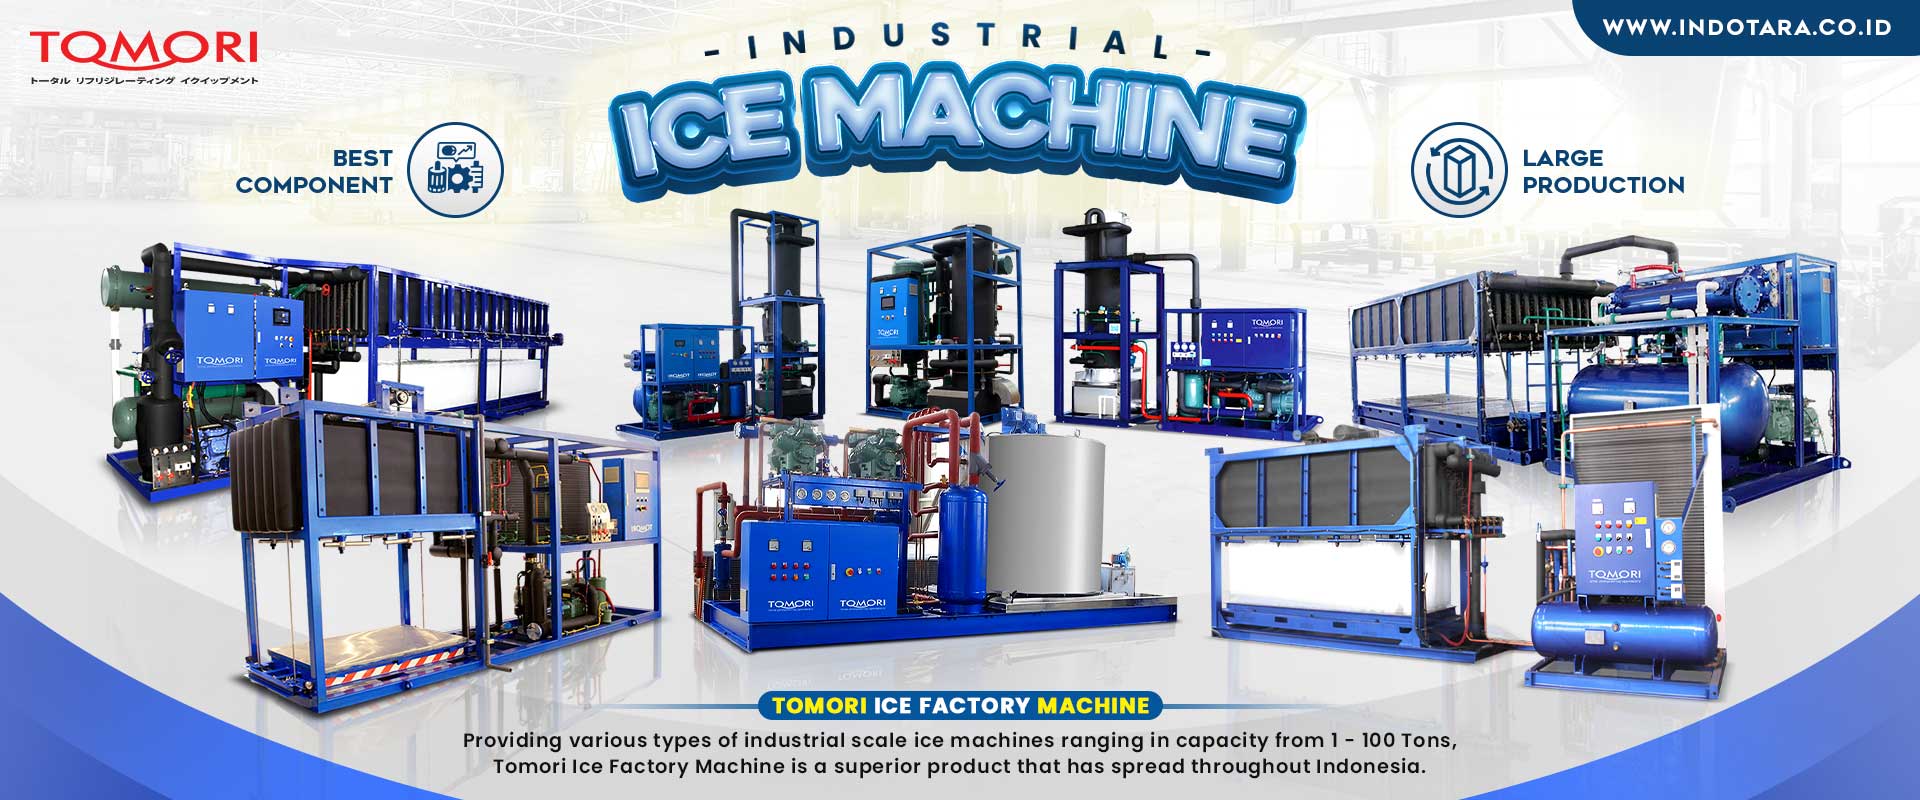 Jual Tomori Industrial Tube Ice Machine